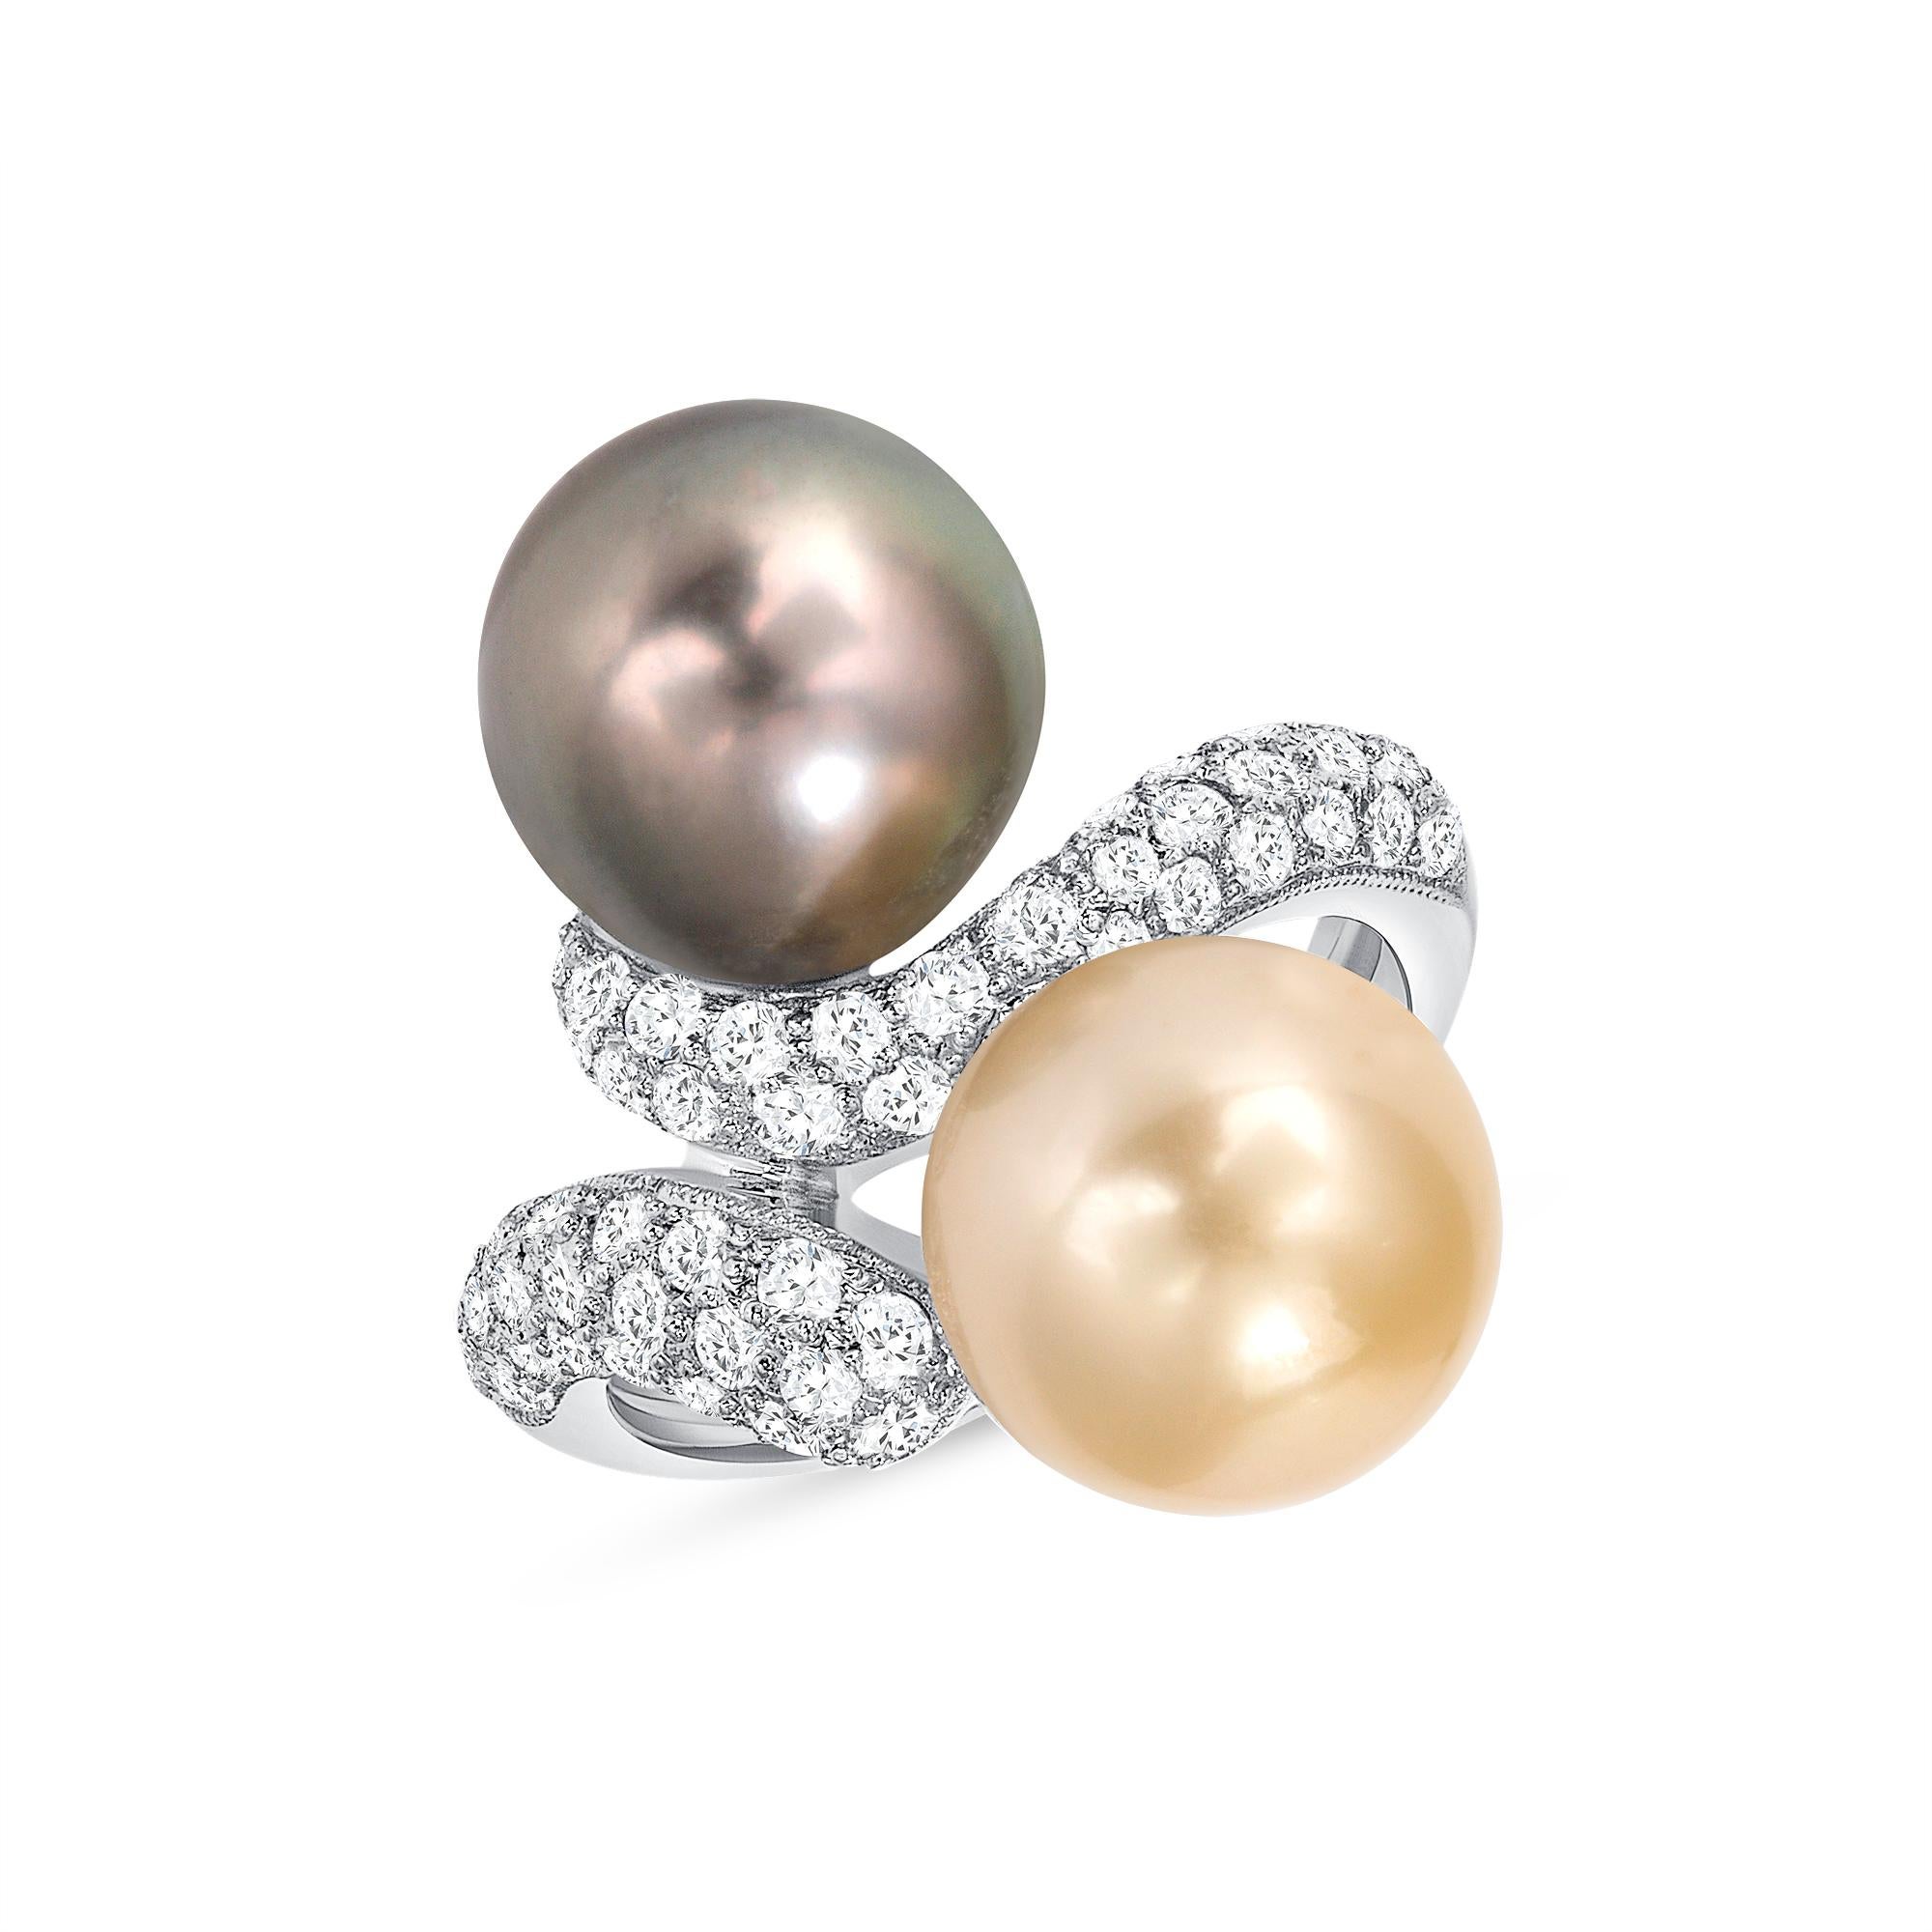 14K White Genuine Diamond
2 South Sea Tahitian Pearls (10MM Each)
0.70 Carat Diamond
Total Gold Weight: 6.6 Grams
